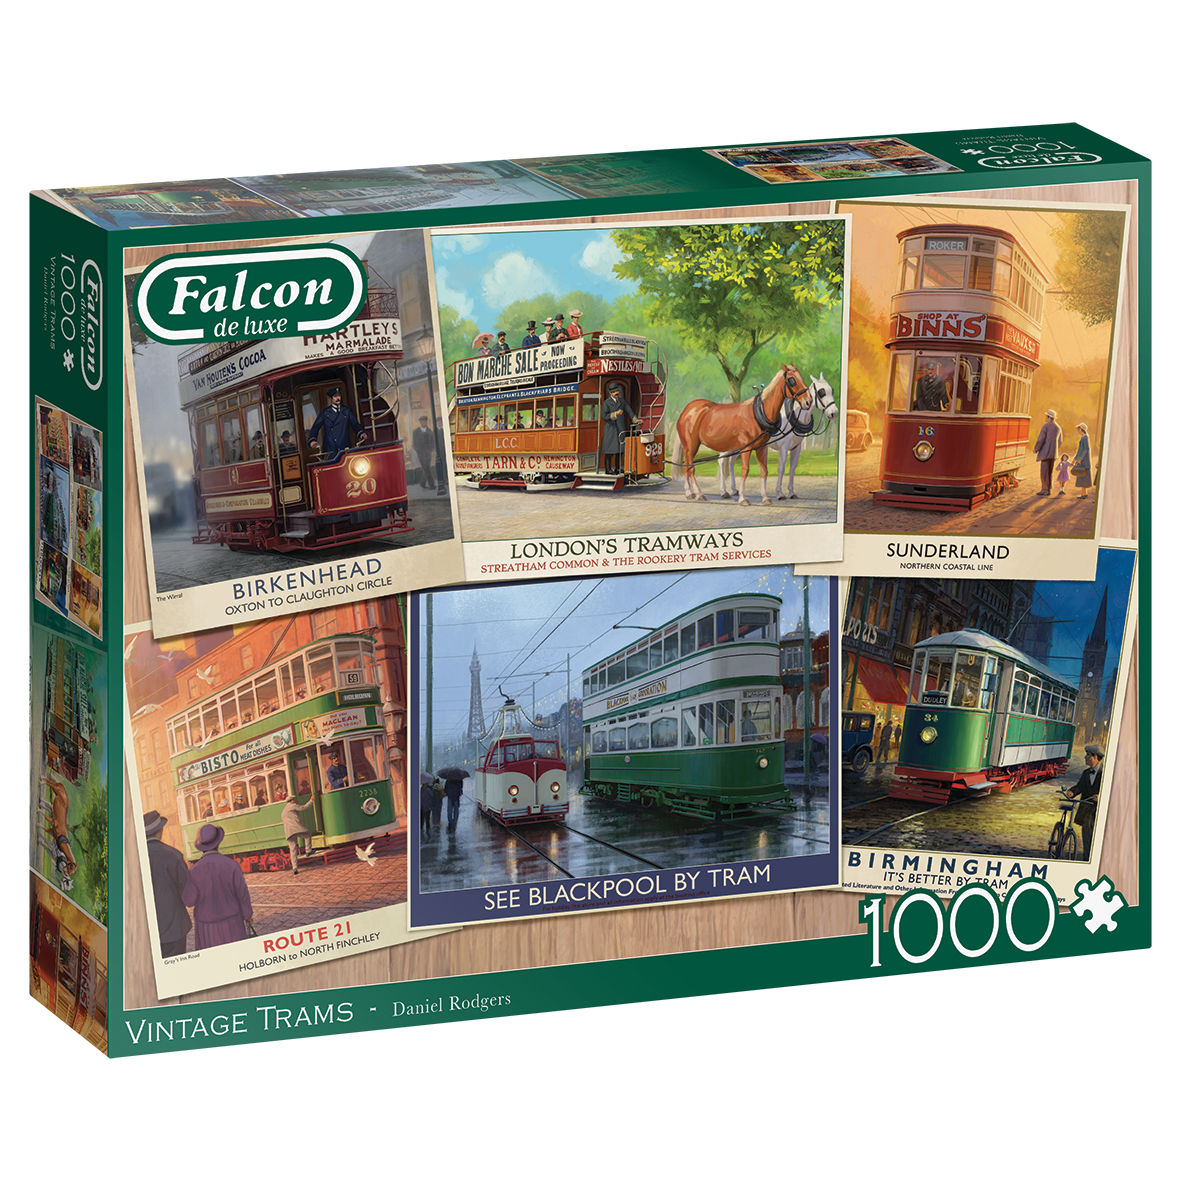 Falcon De luxe - Vintage Trams - 1000 Piece Jigsaw Puzzle